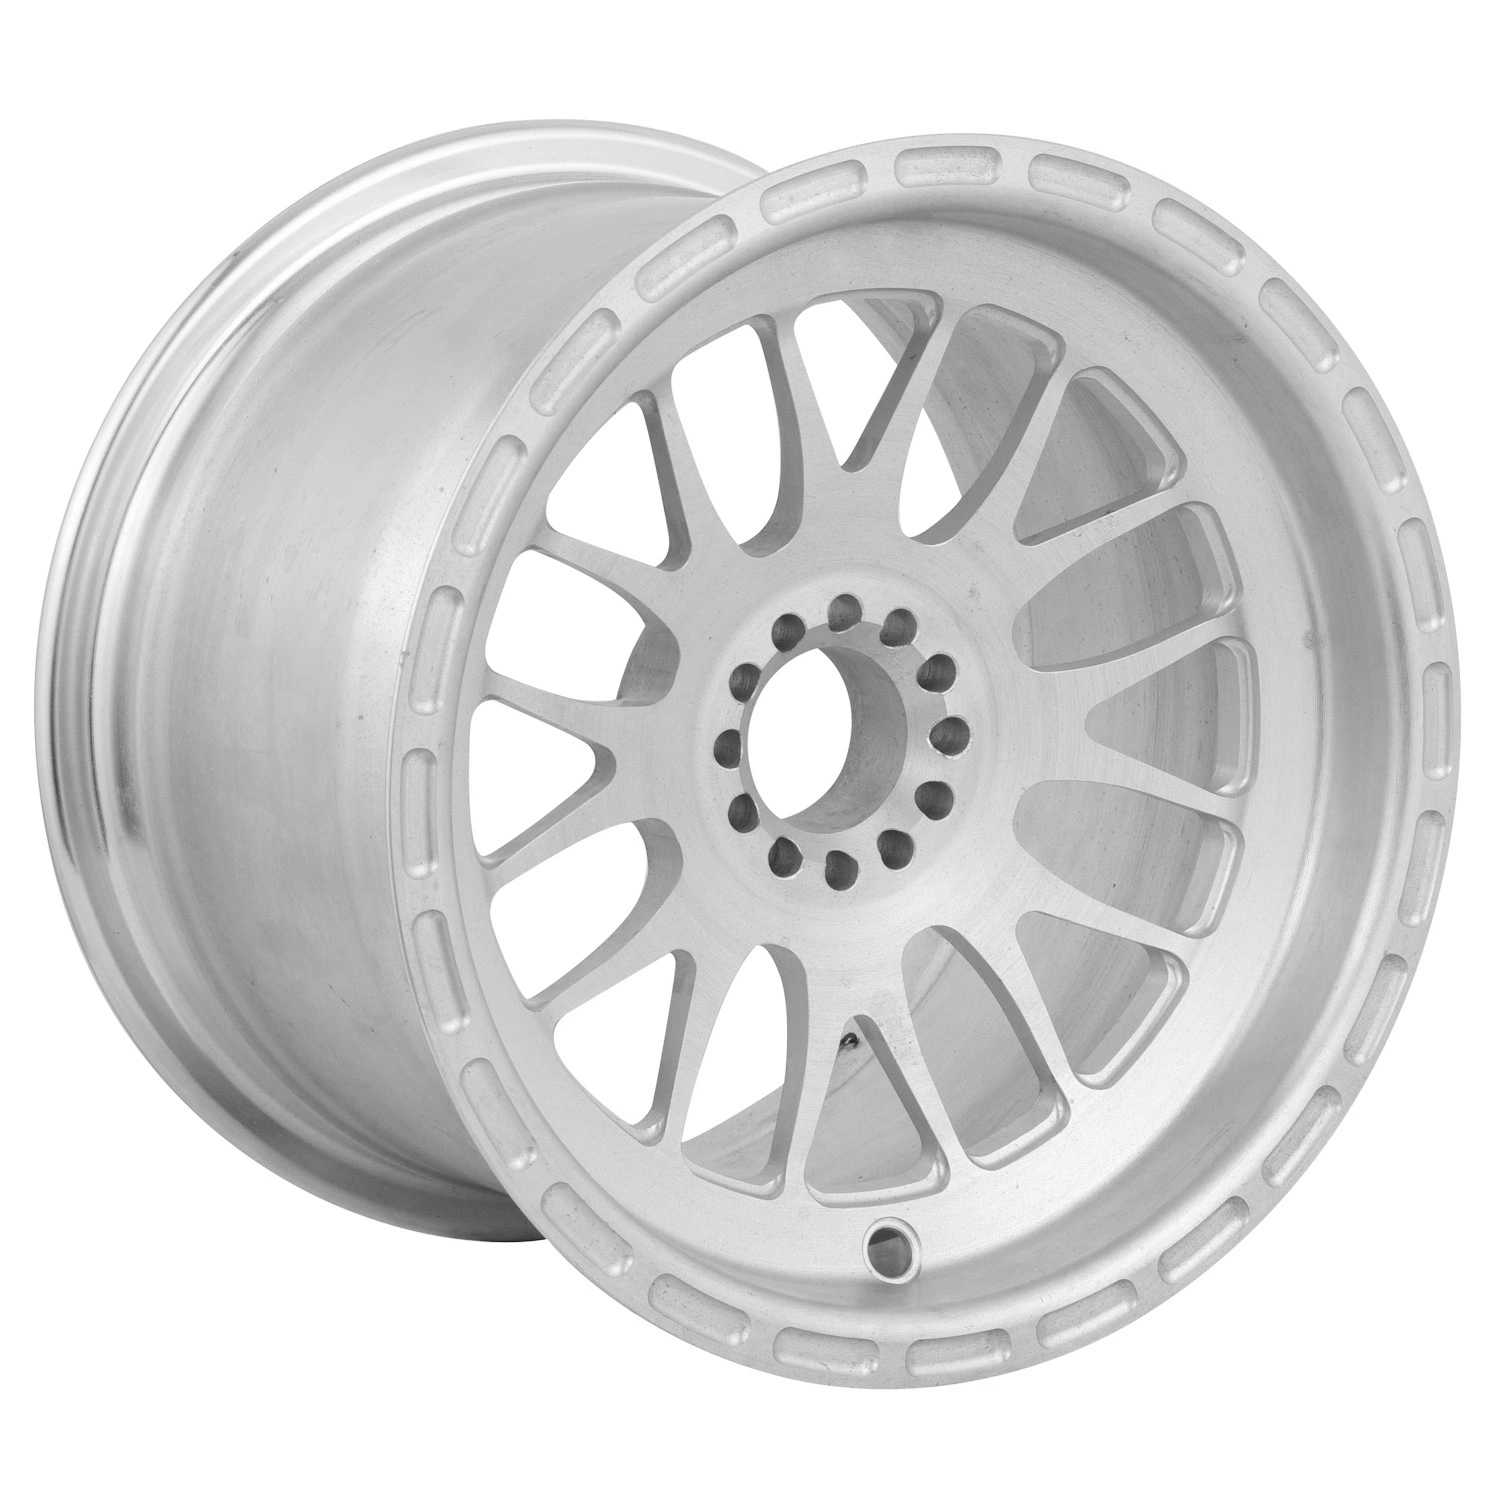 Karting Forged Aluminum Wheels Auto Parts Alloy Wheels Wheel Rims Wheel Hub